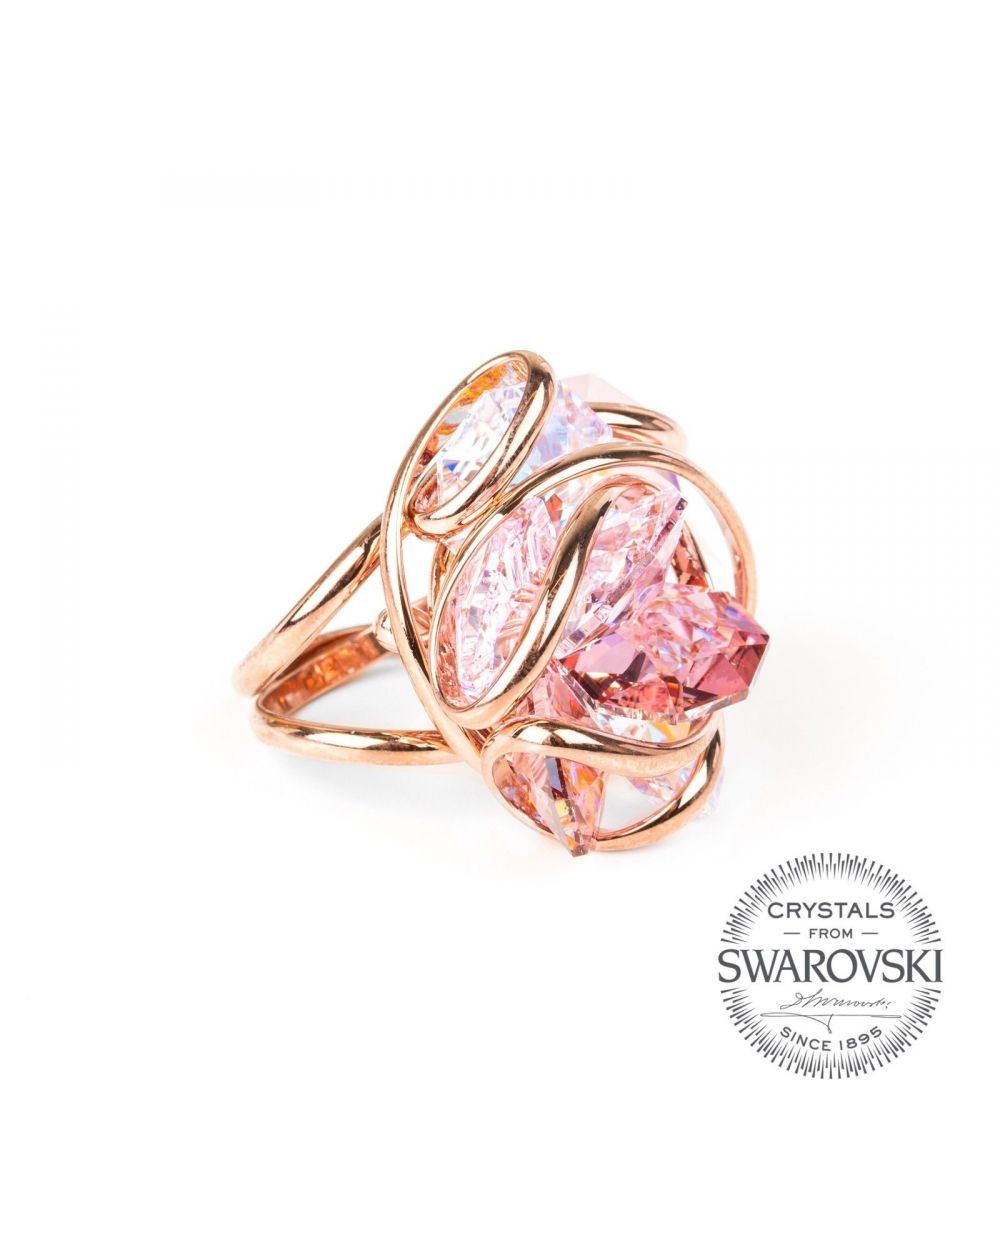 Marazzini - crystal ring Swarovski pink flower